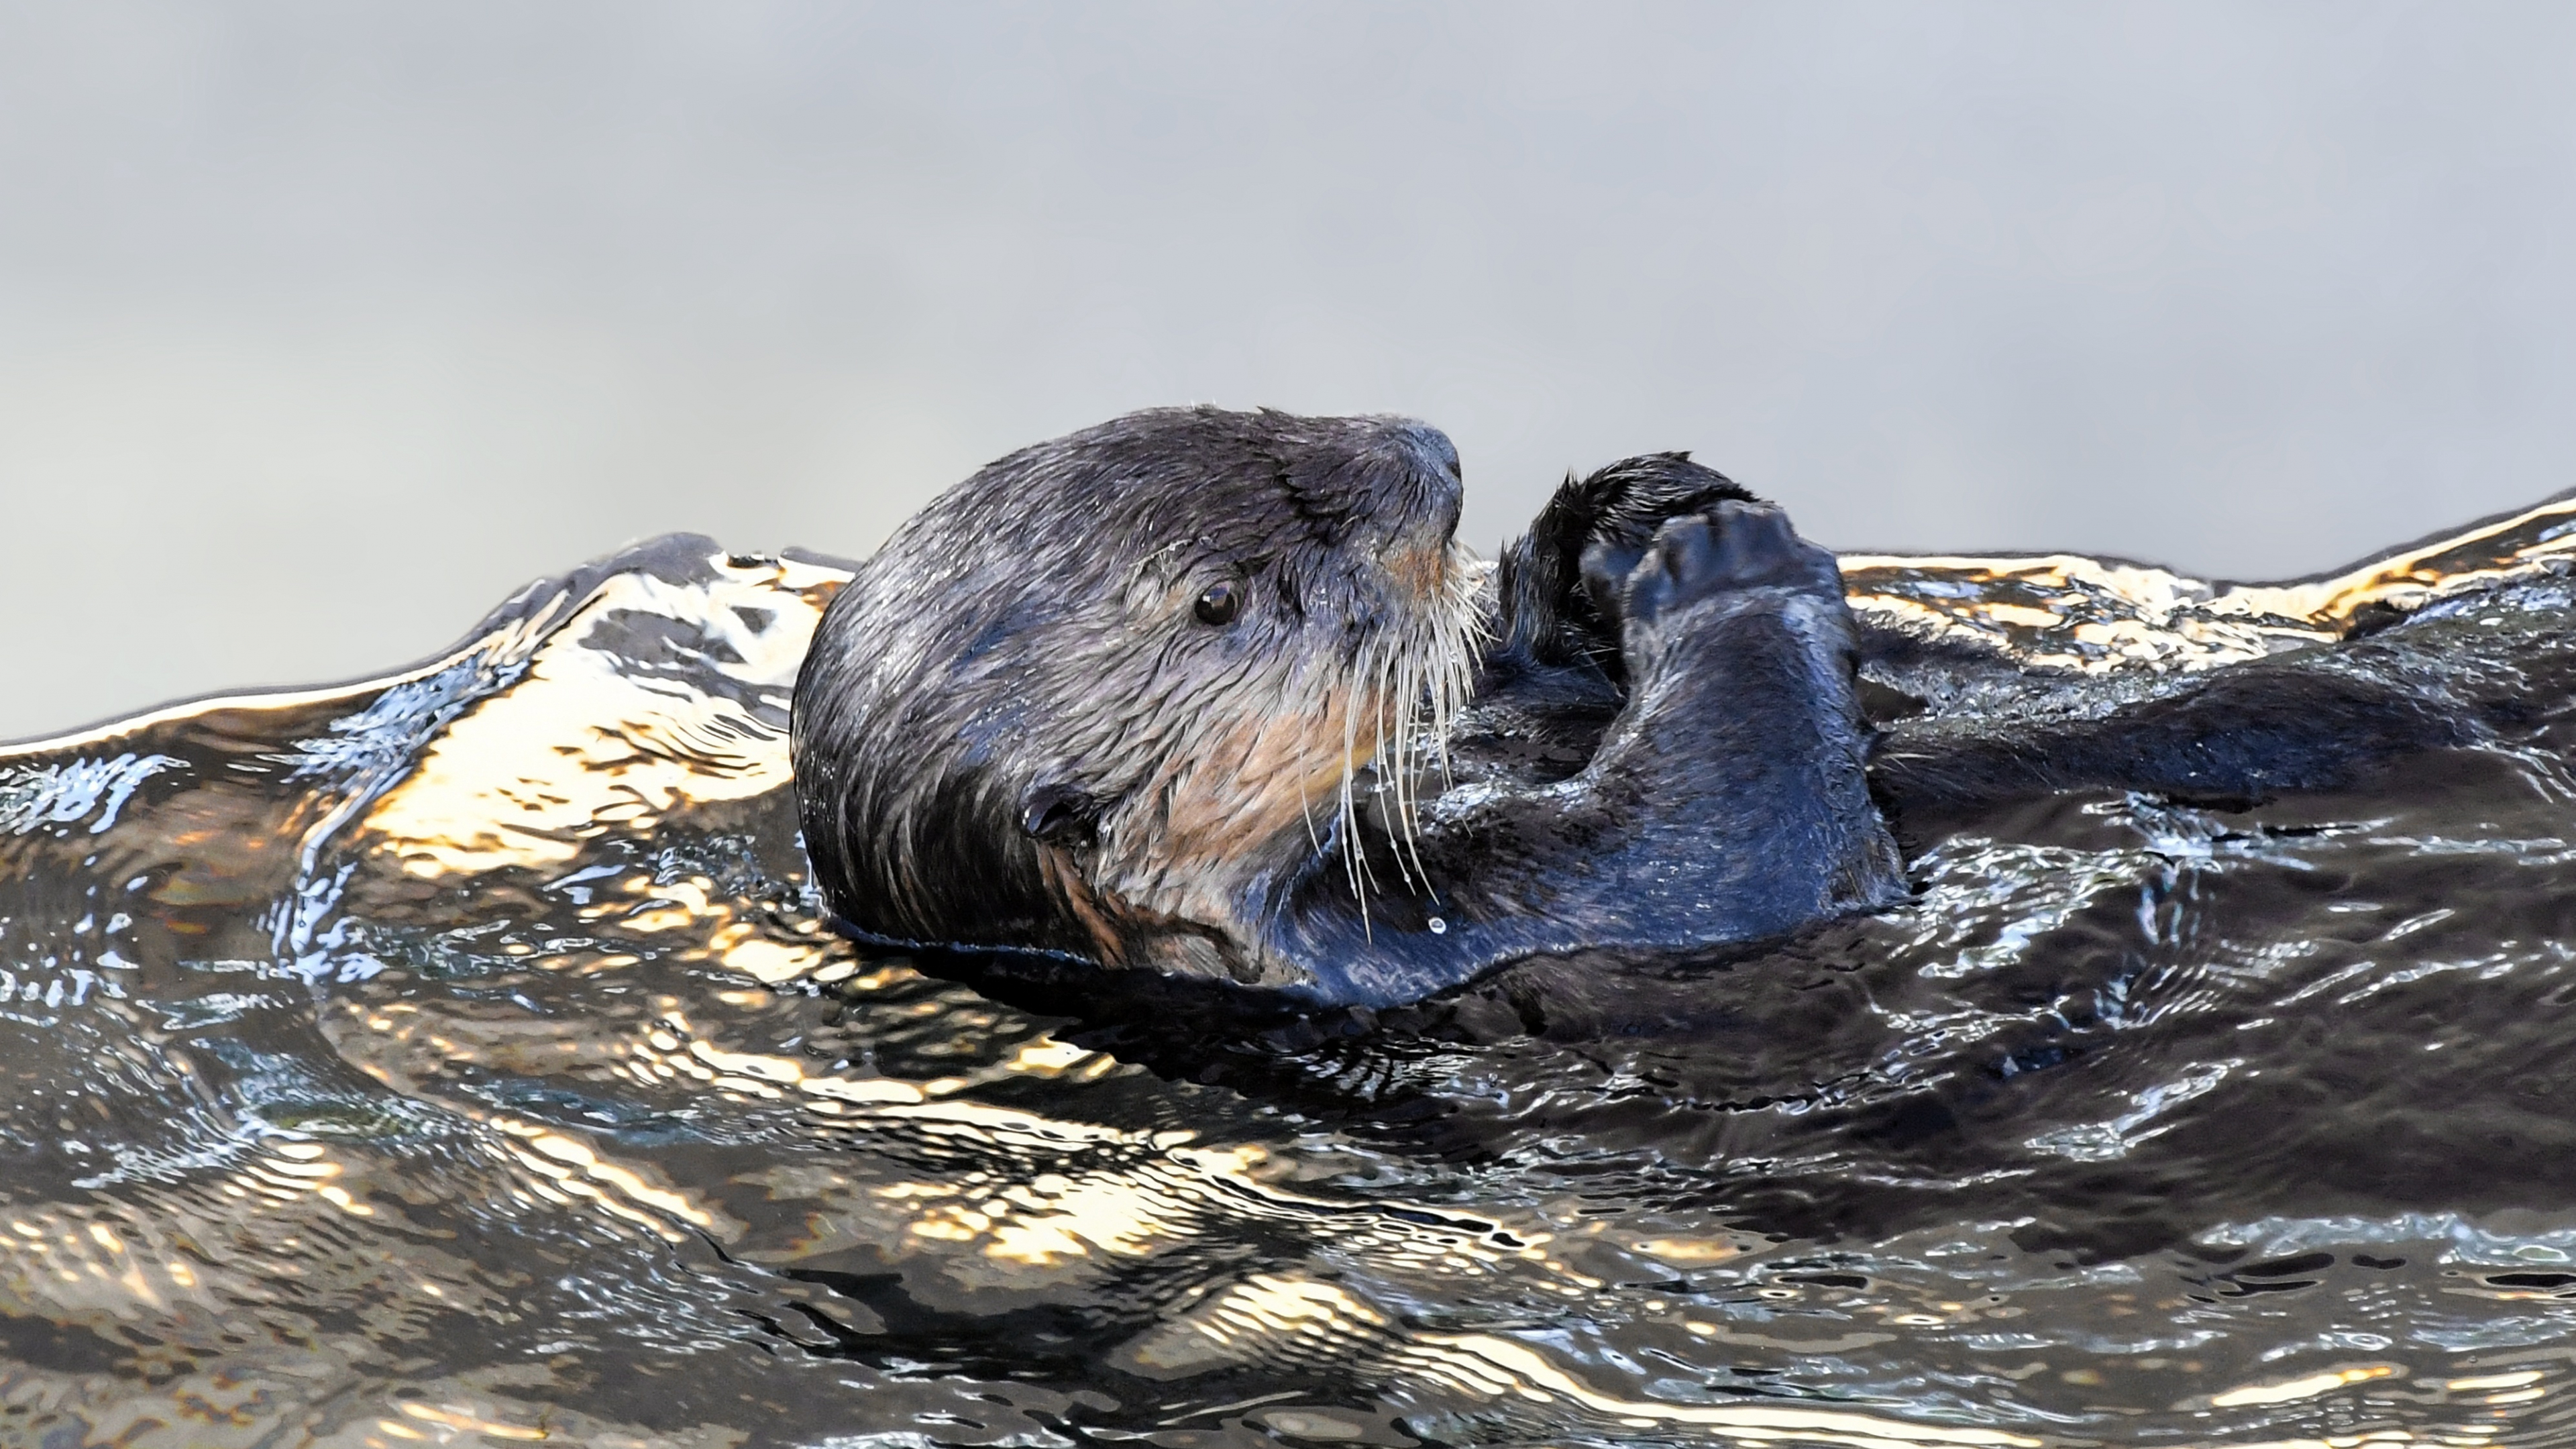 3840x2160 Download sea otter, aquatic animal, swim 4k wallpaper, uhd wallpaper, 16:9 widescreen wallpaper, hd image, background, 6034